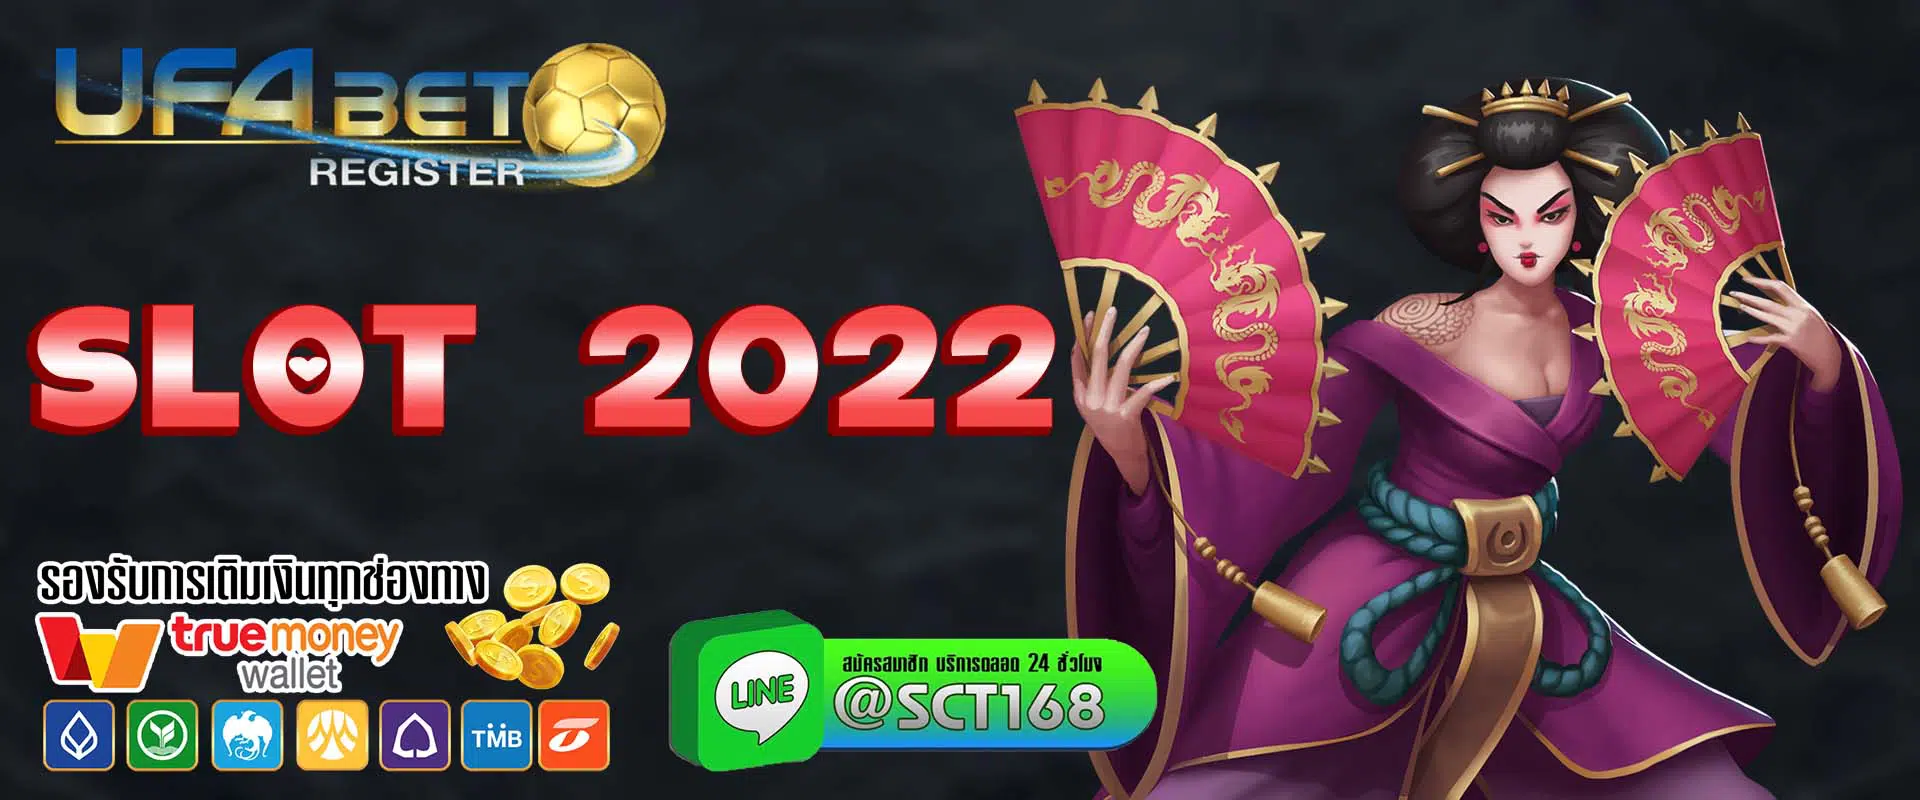 slot 2022 เว็บตรง